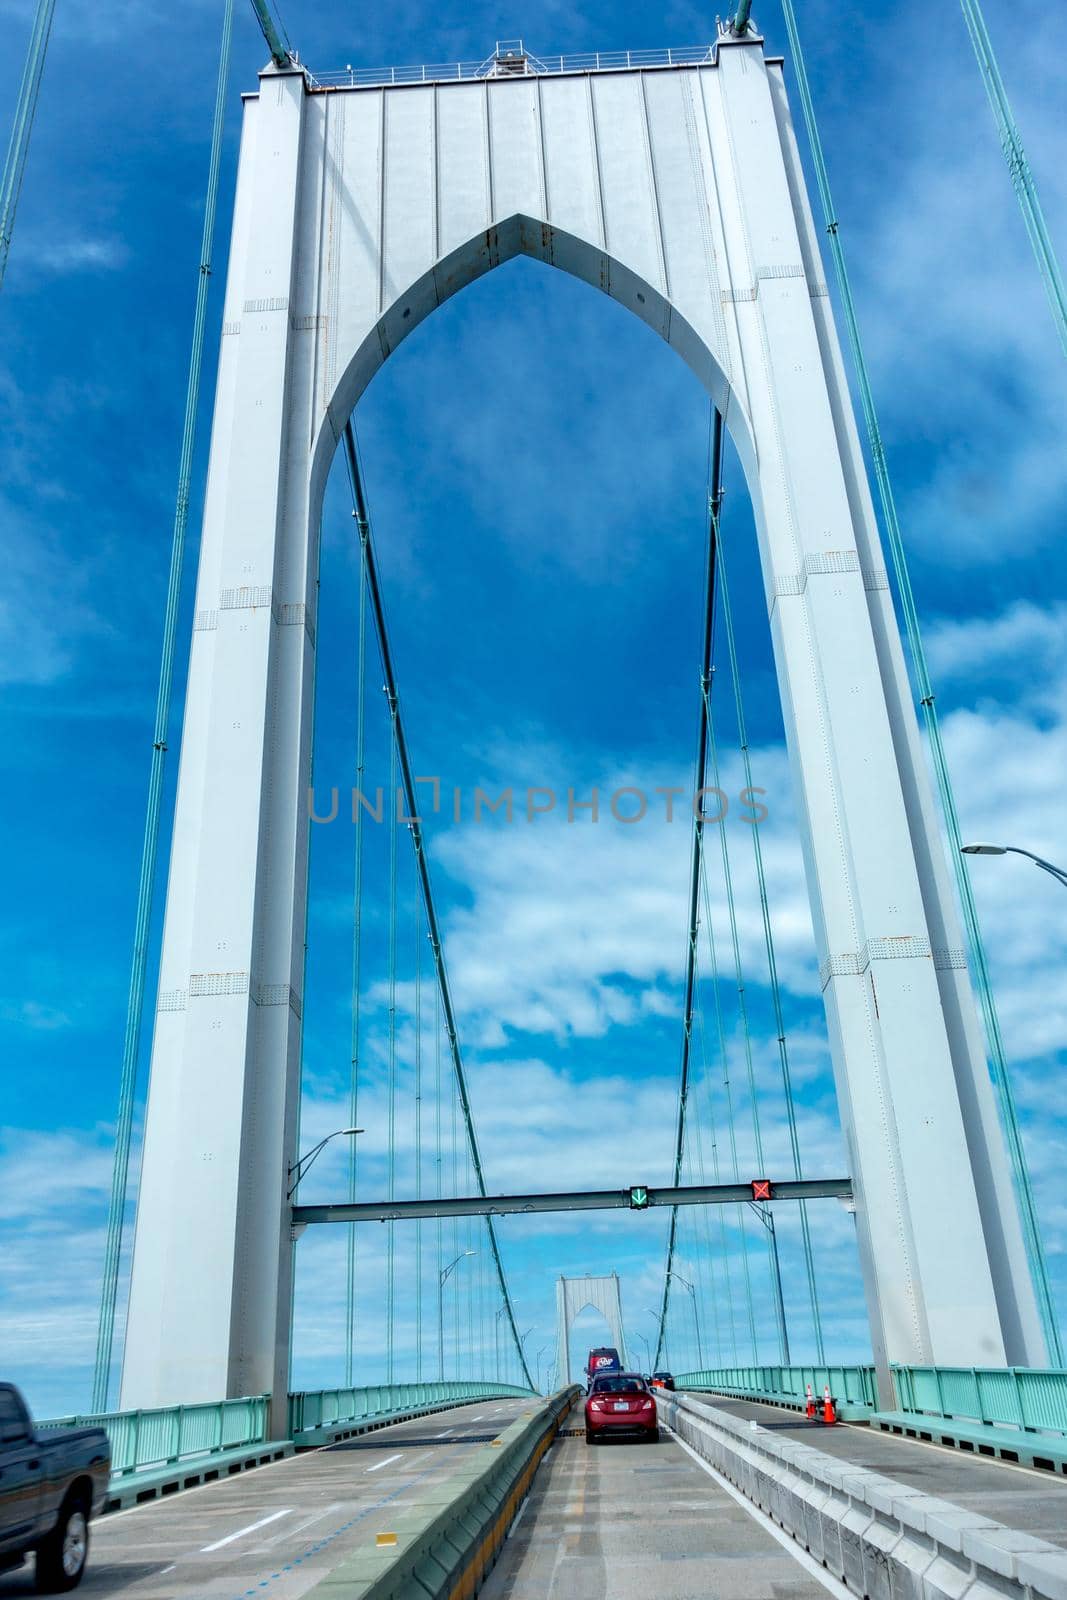 The Claiborne Pell Bridge is among the longest suspension bridges in the world located in Newport, RI, USA.